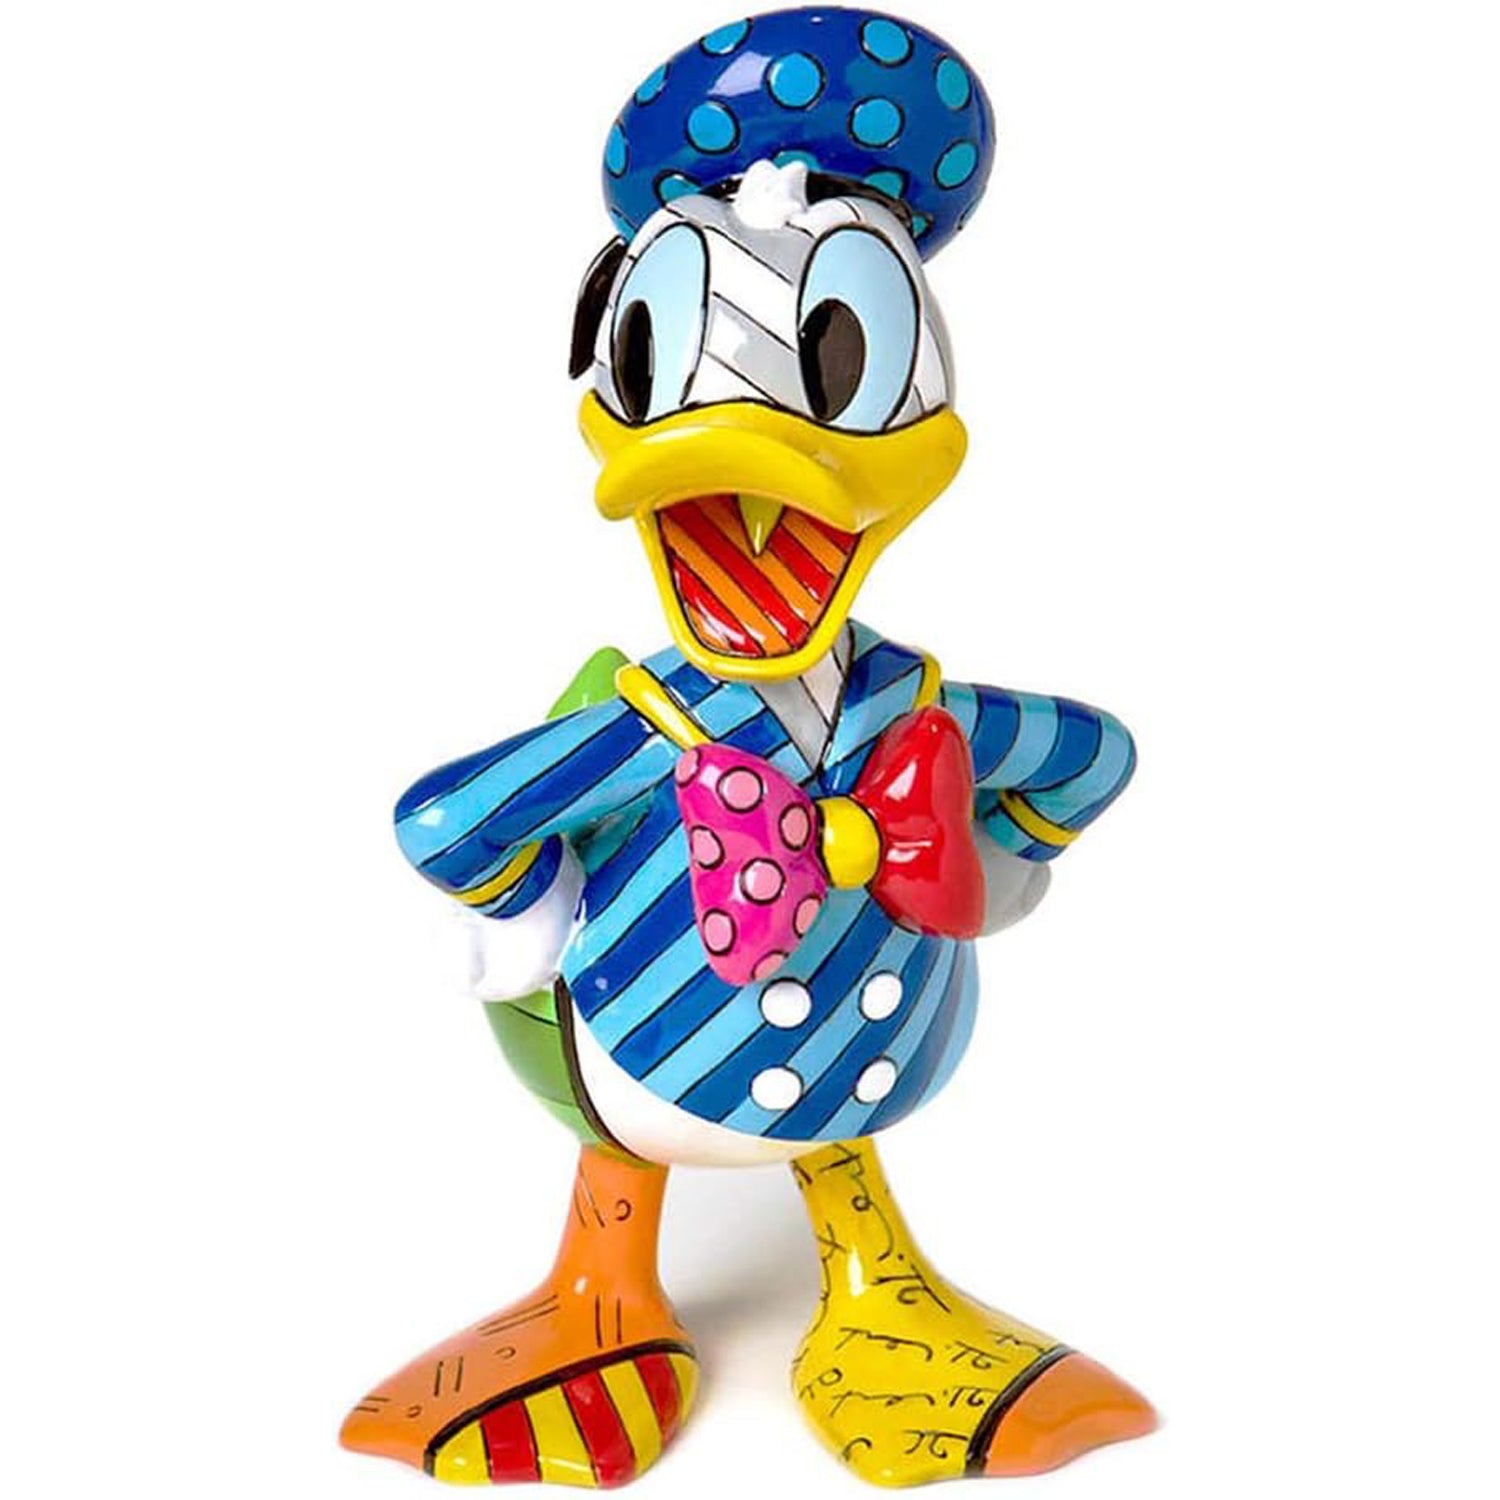 Donald-Duck-Britto-Figur-berlindeluxe-ente-hut